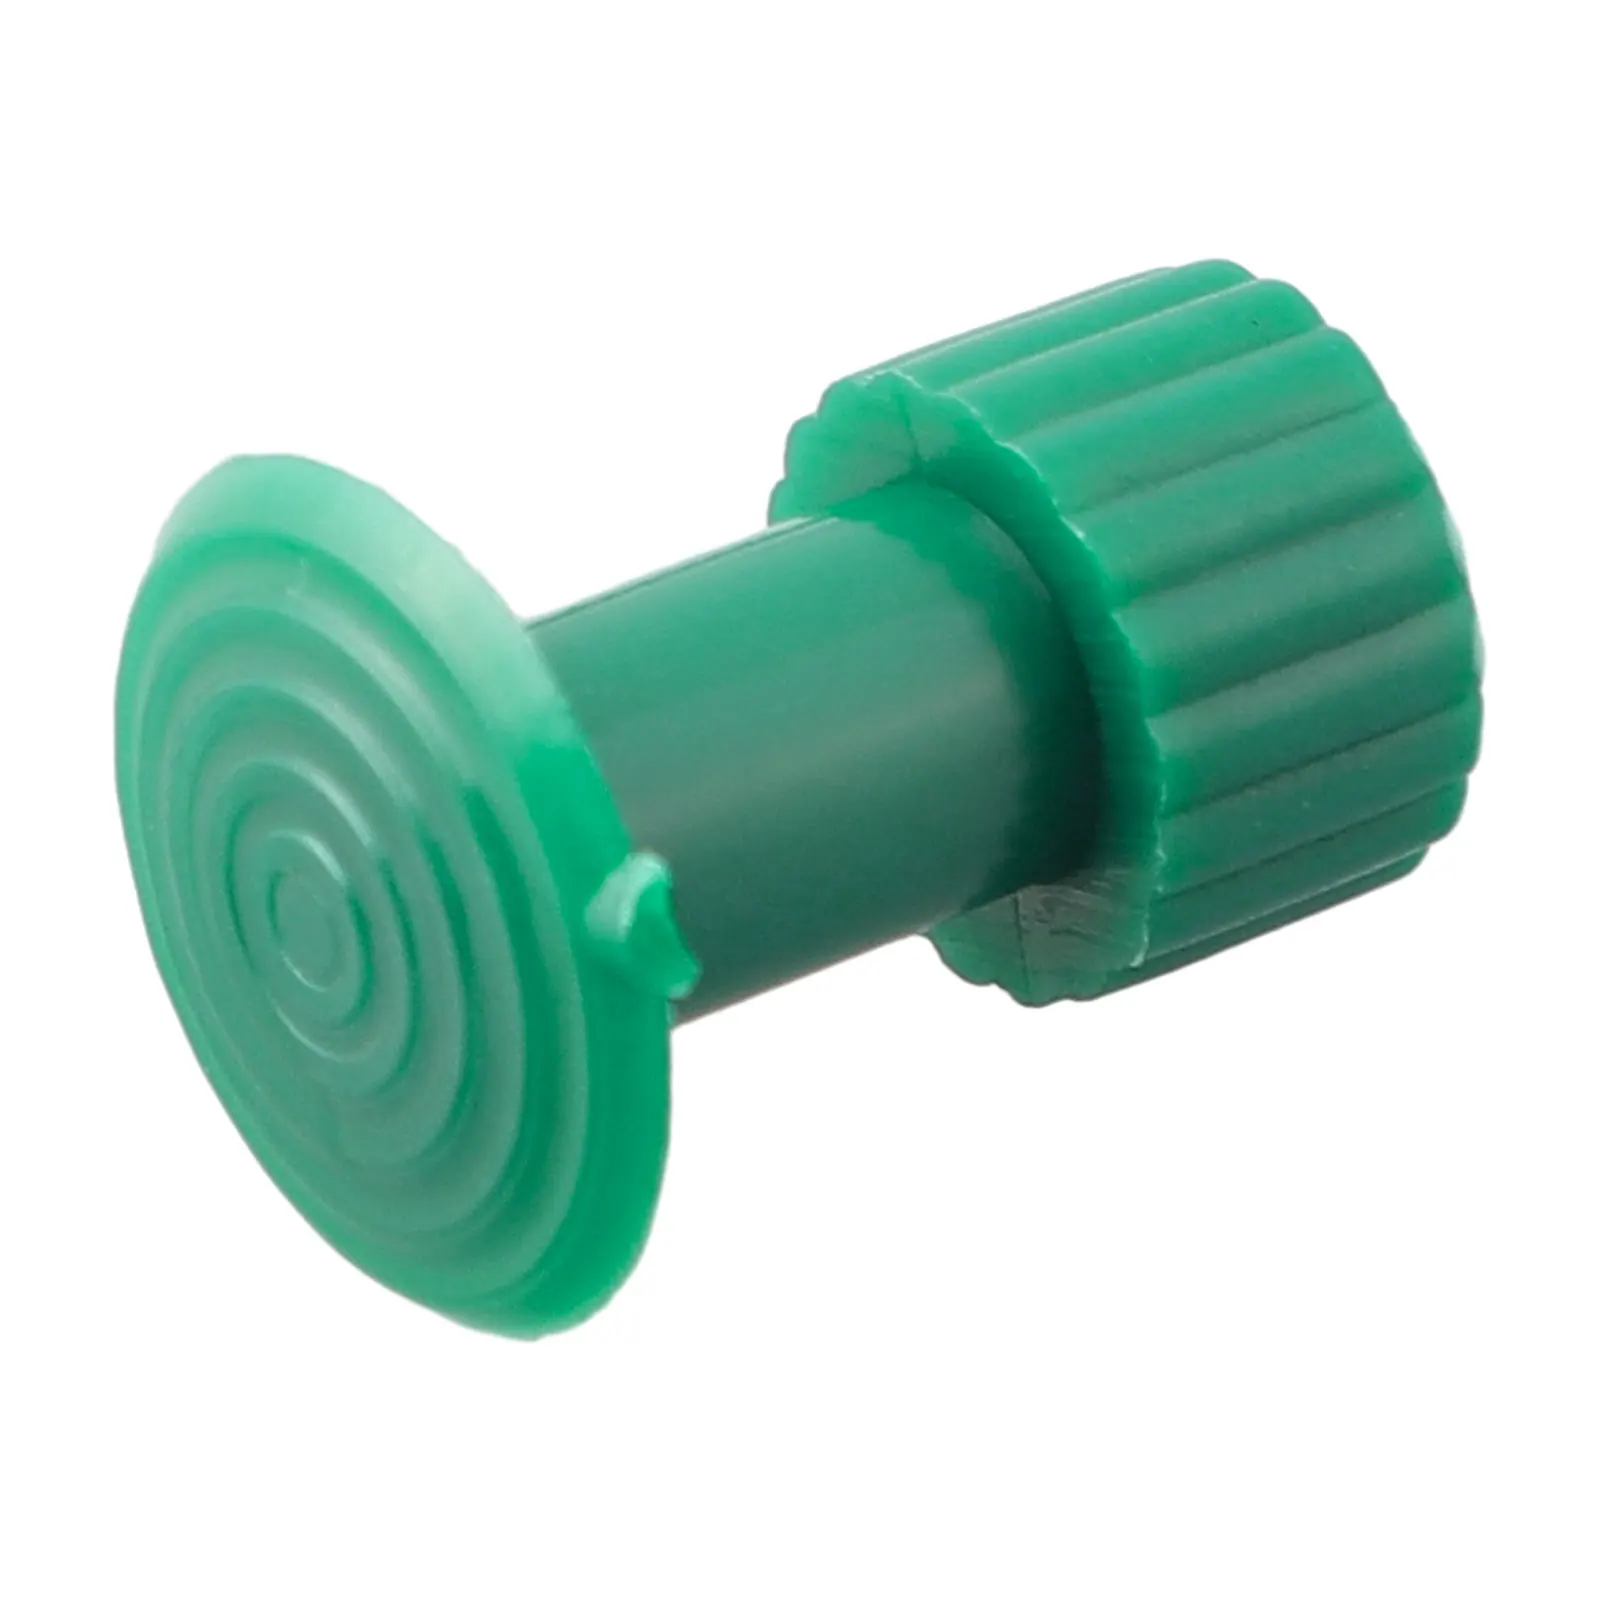 

30pcs Glue Tabs Dent Removal Tools Dent Removal Tool Car Body Glue Tabs Green Plastic Car Part For Dent Lifter Slide Hammer